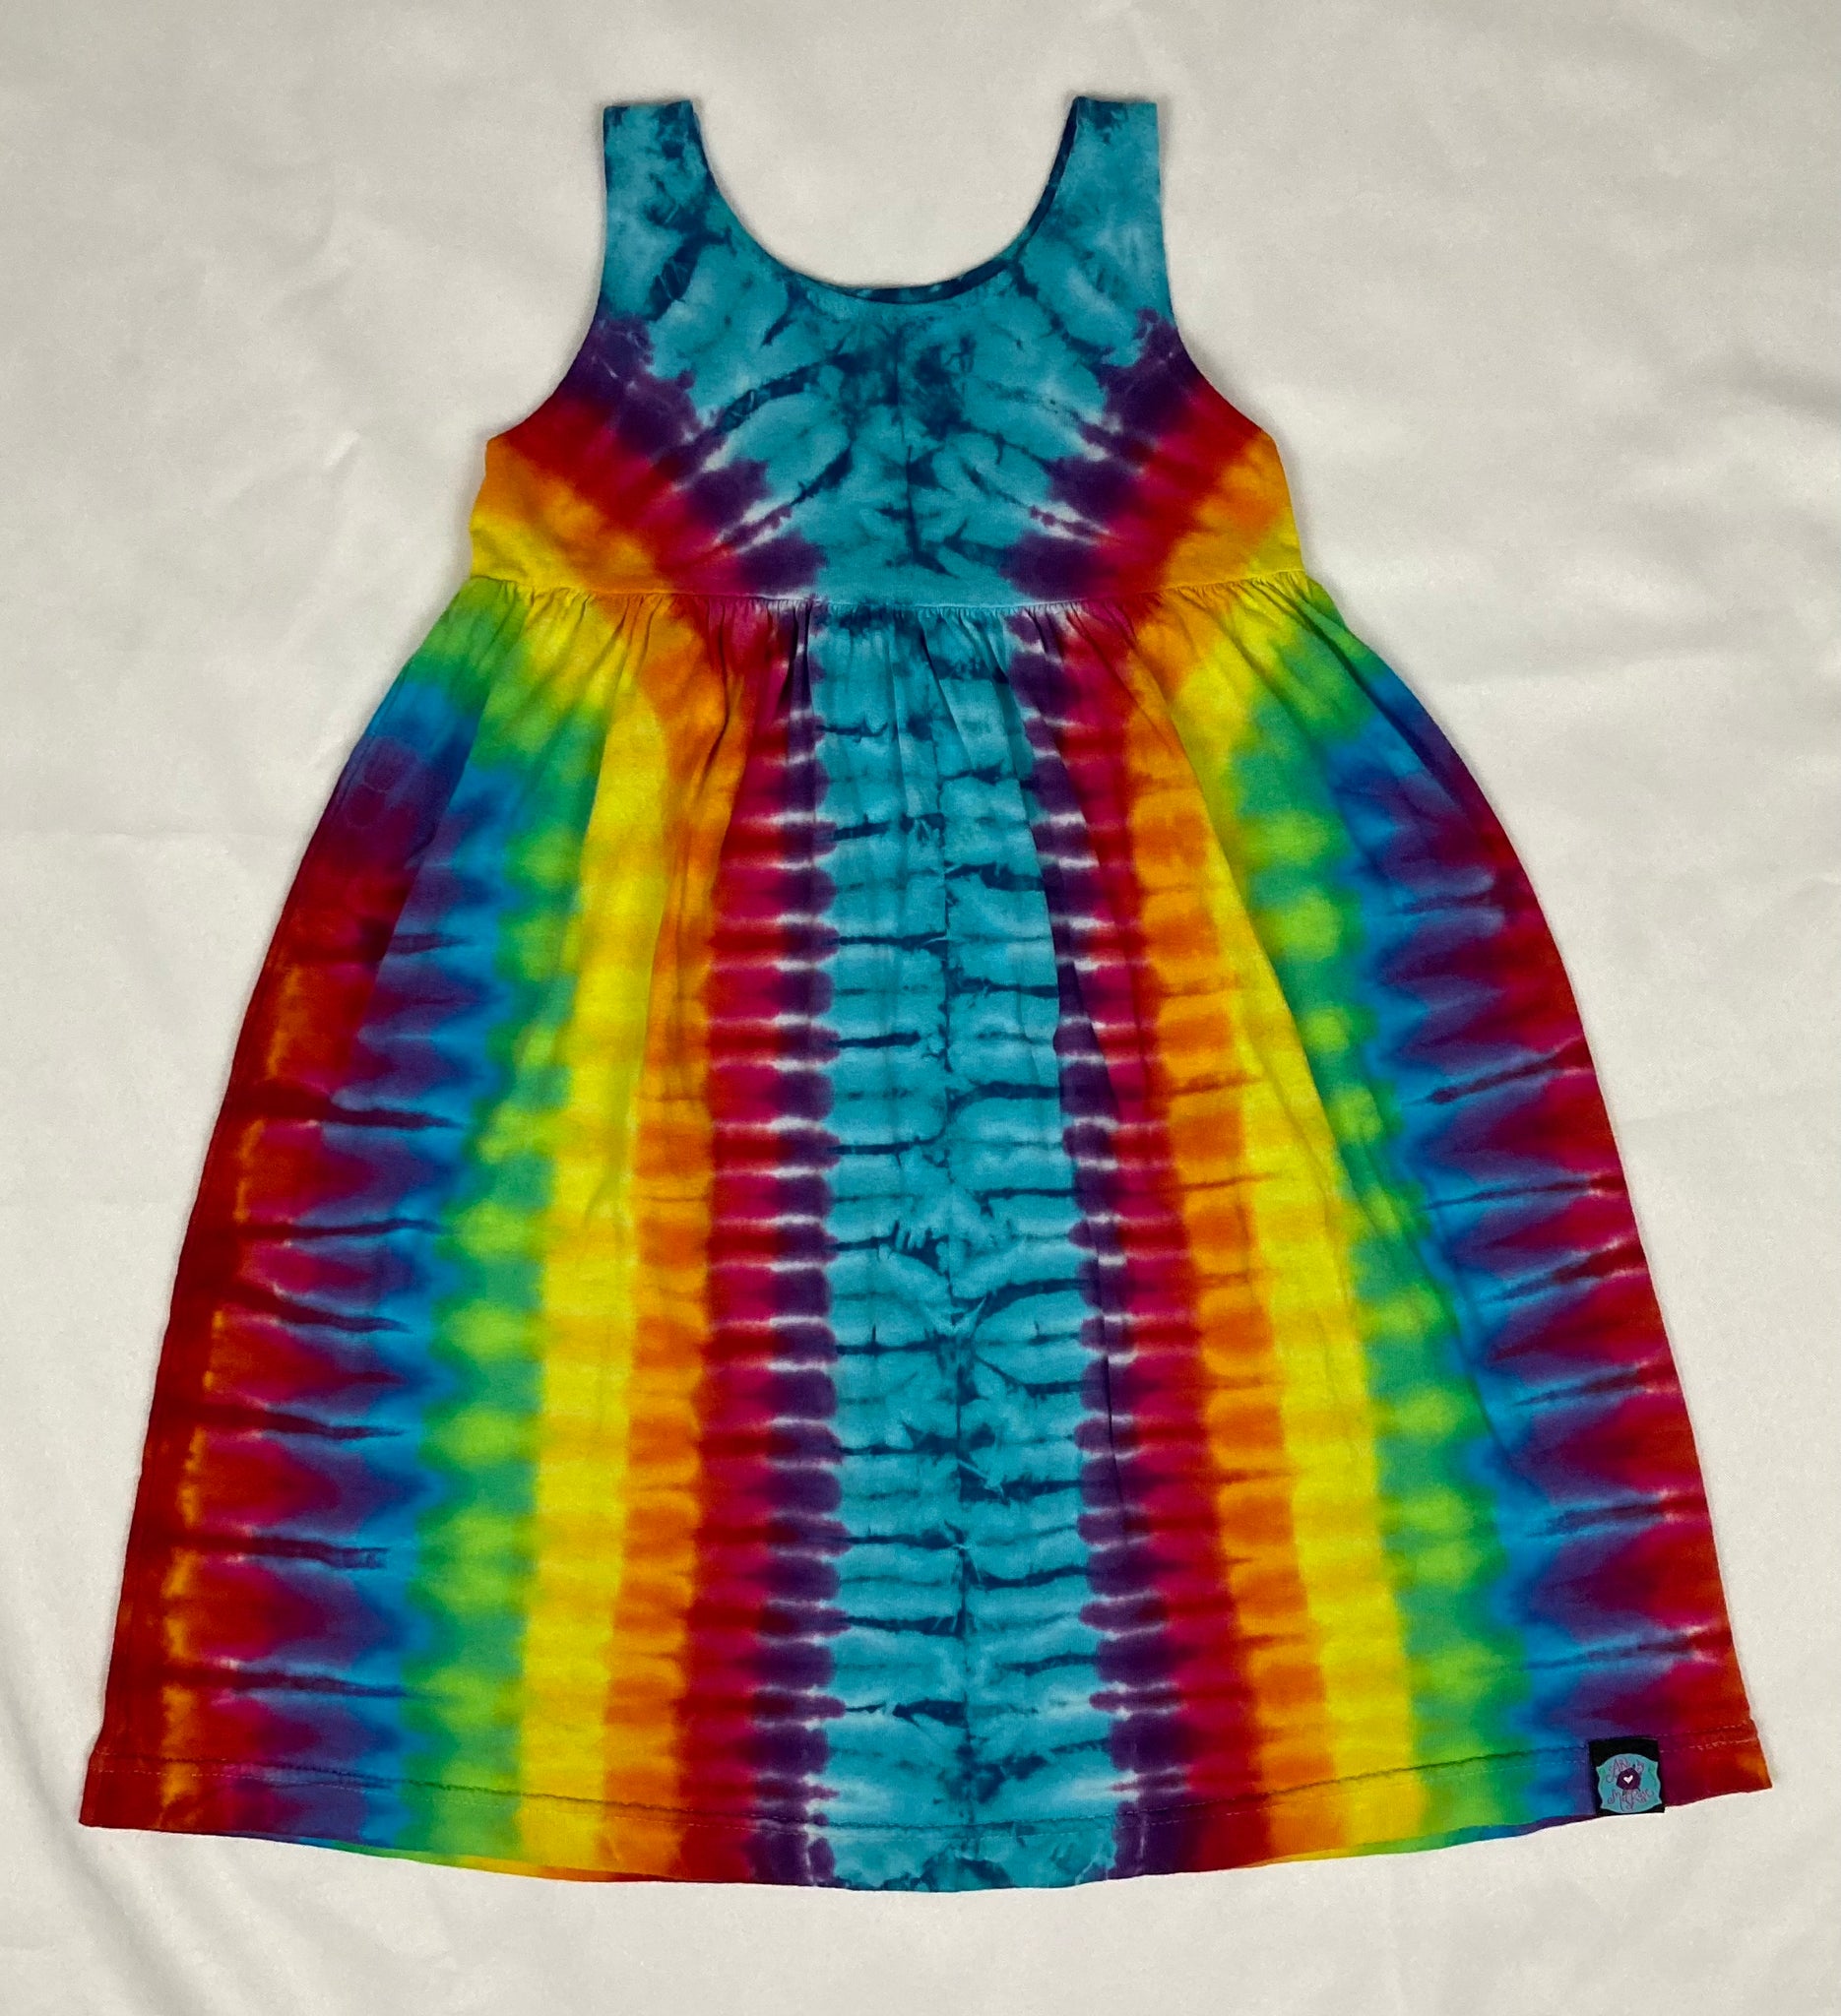 Youth Aqua/Rainbow Tie-Dyed Dress, 6